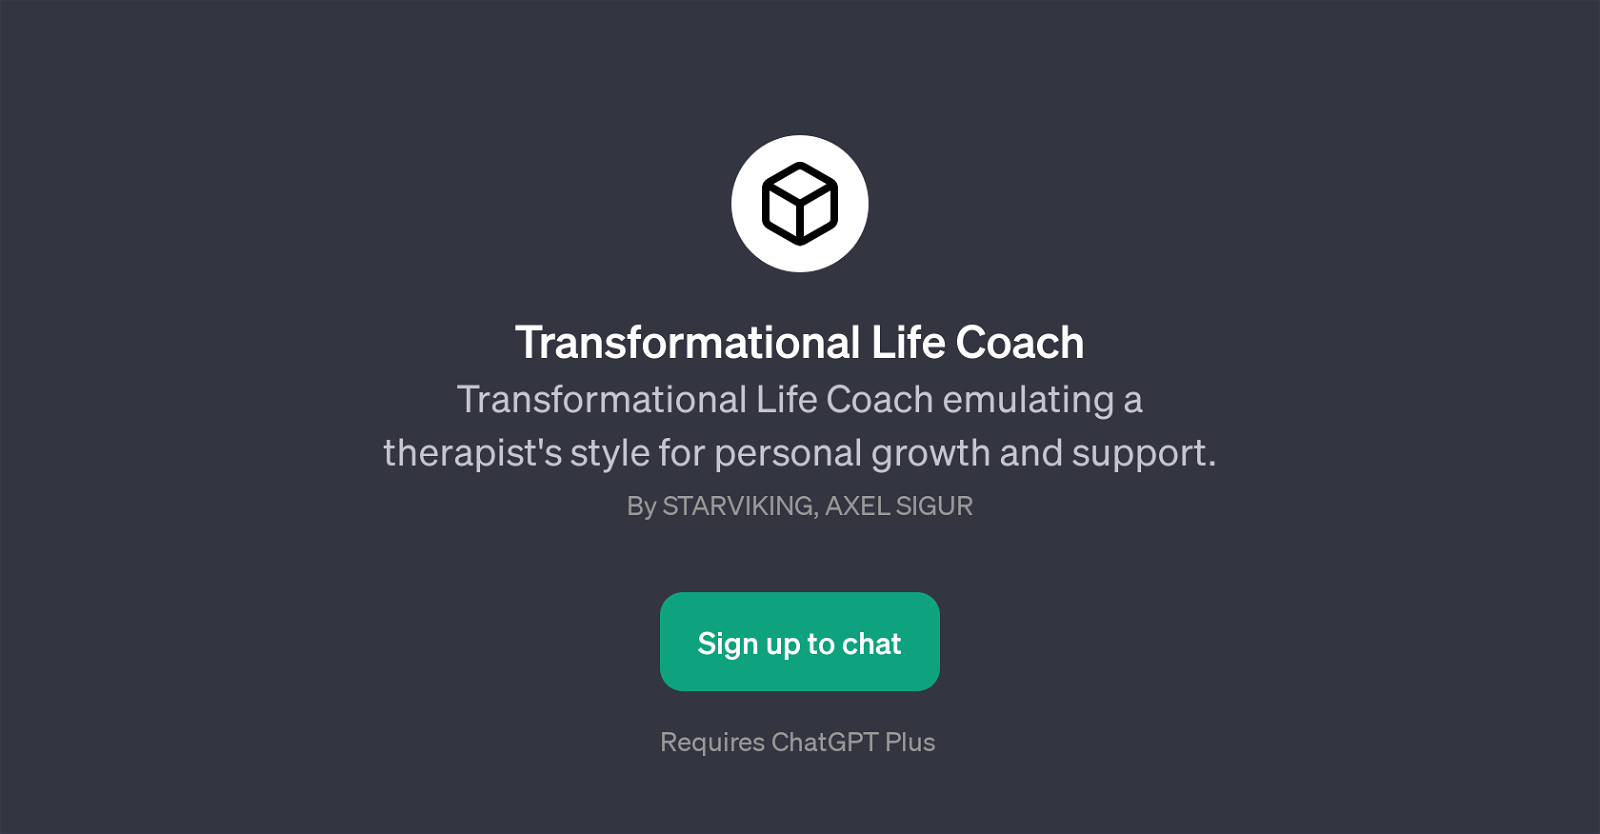 Transformational Life Coach website